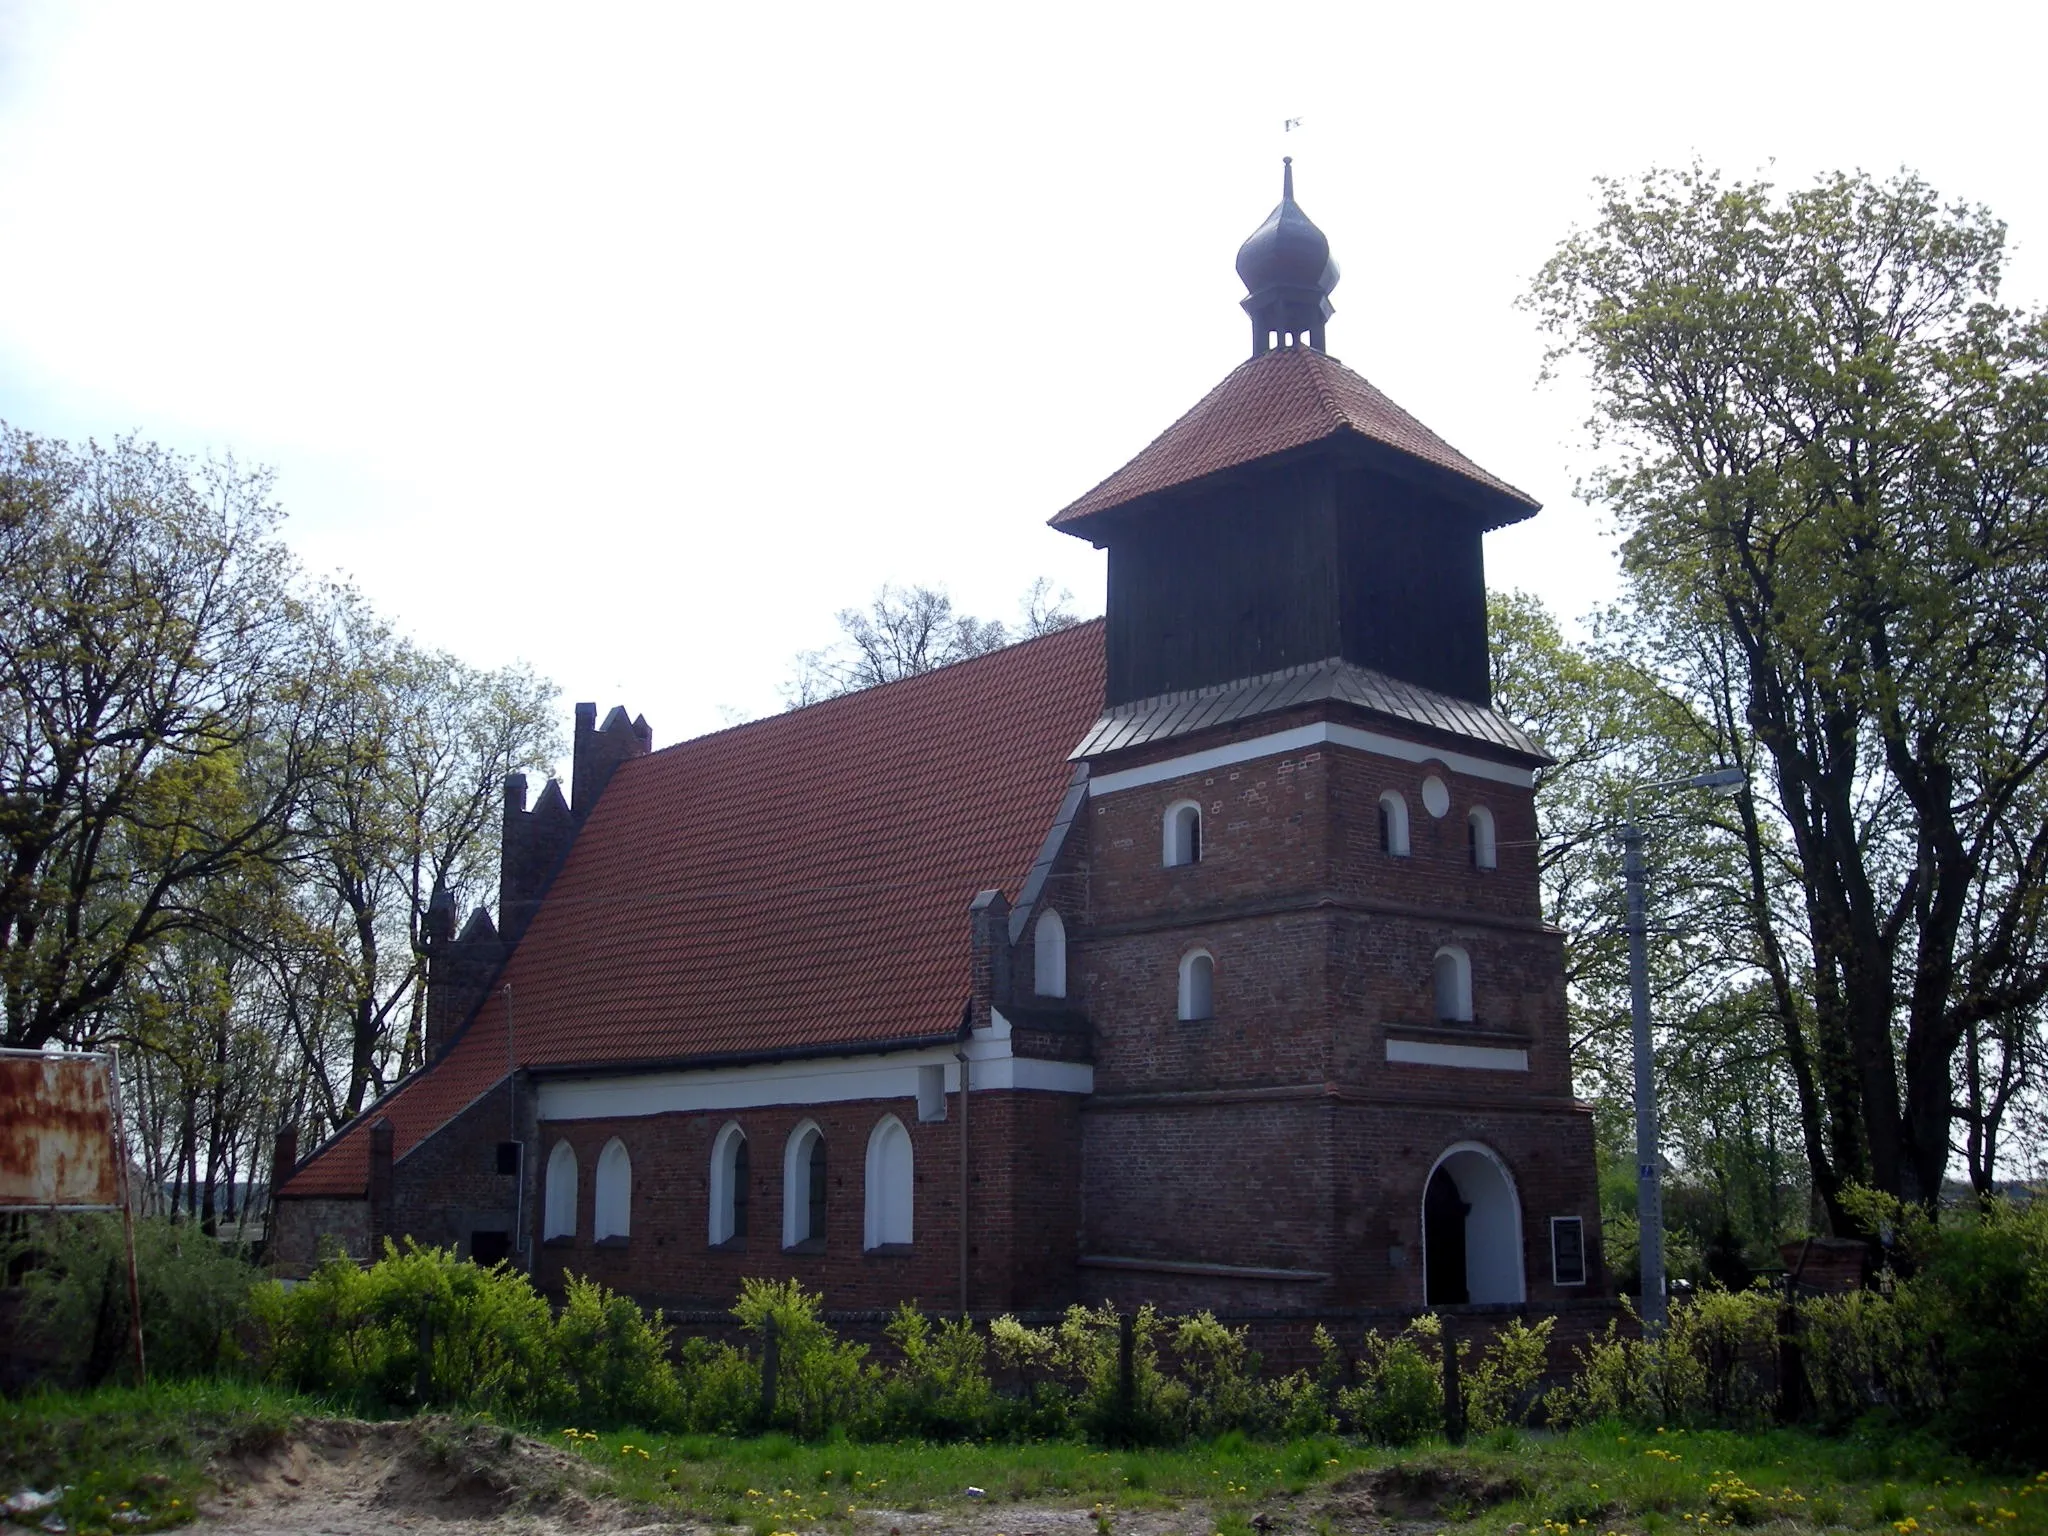 Photo showing: The church in Wielkie Radowiska, Poland.